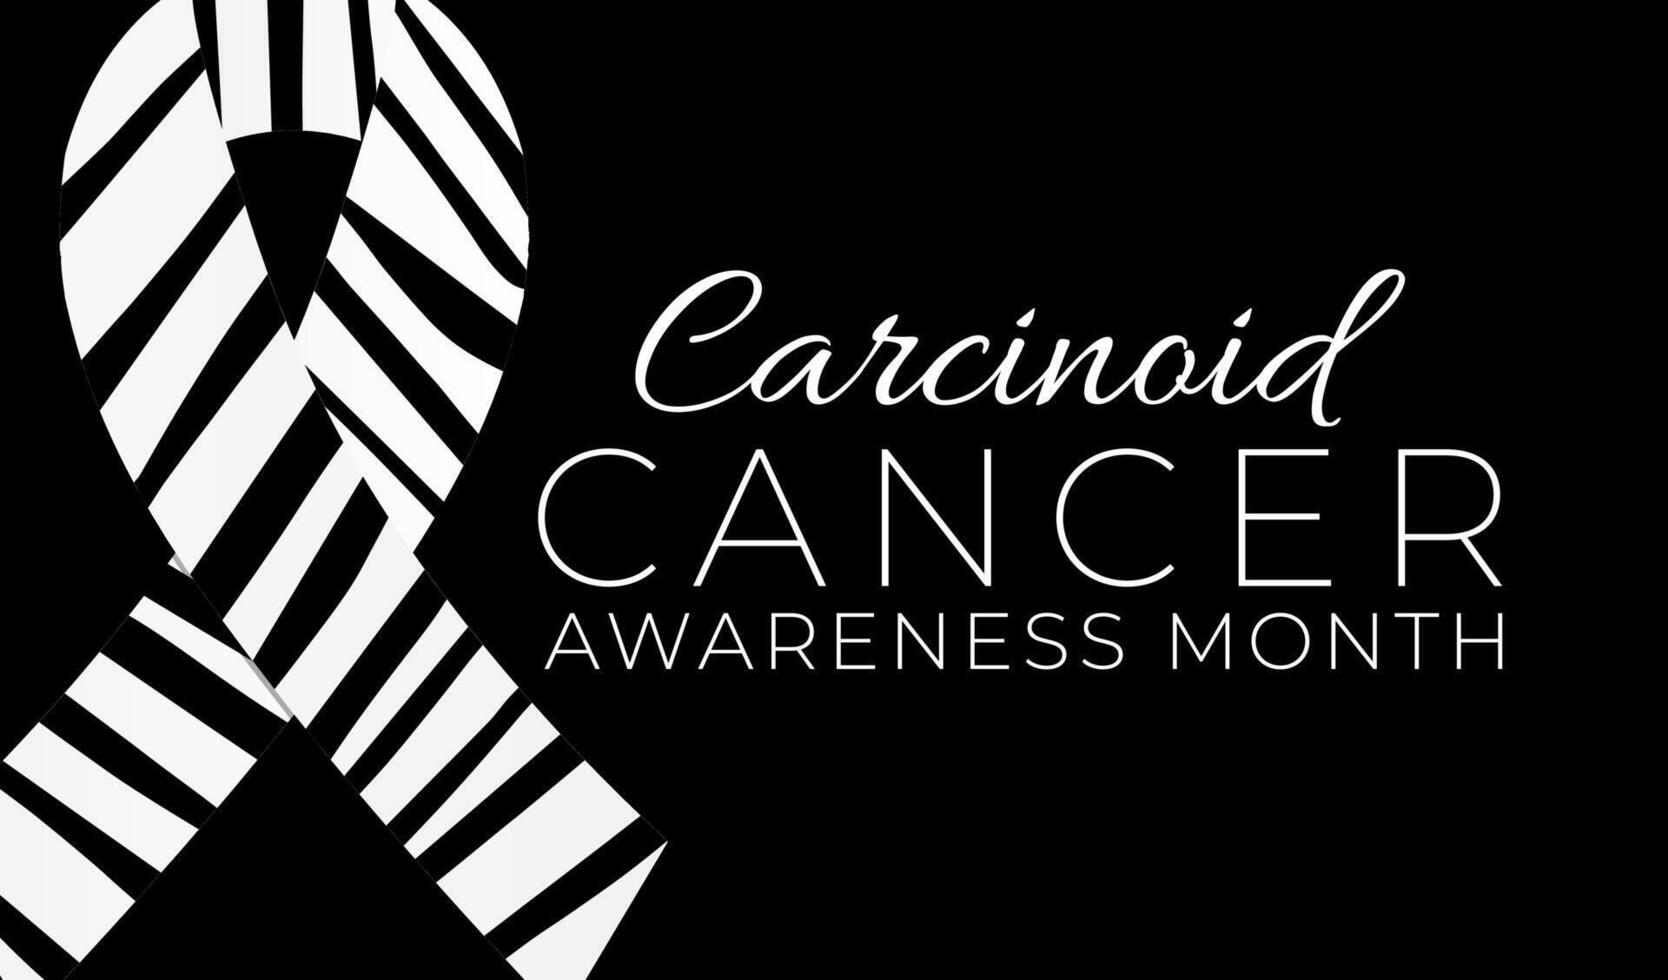 Zebra Print Carcinoid Cancer Awareness Month Background Illustration vector